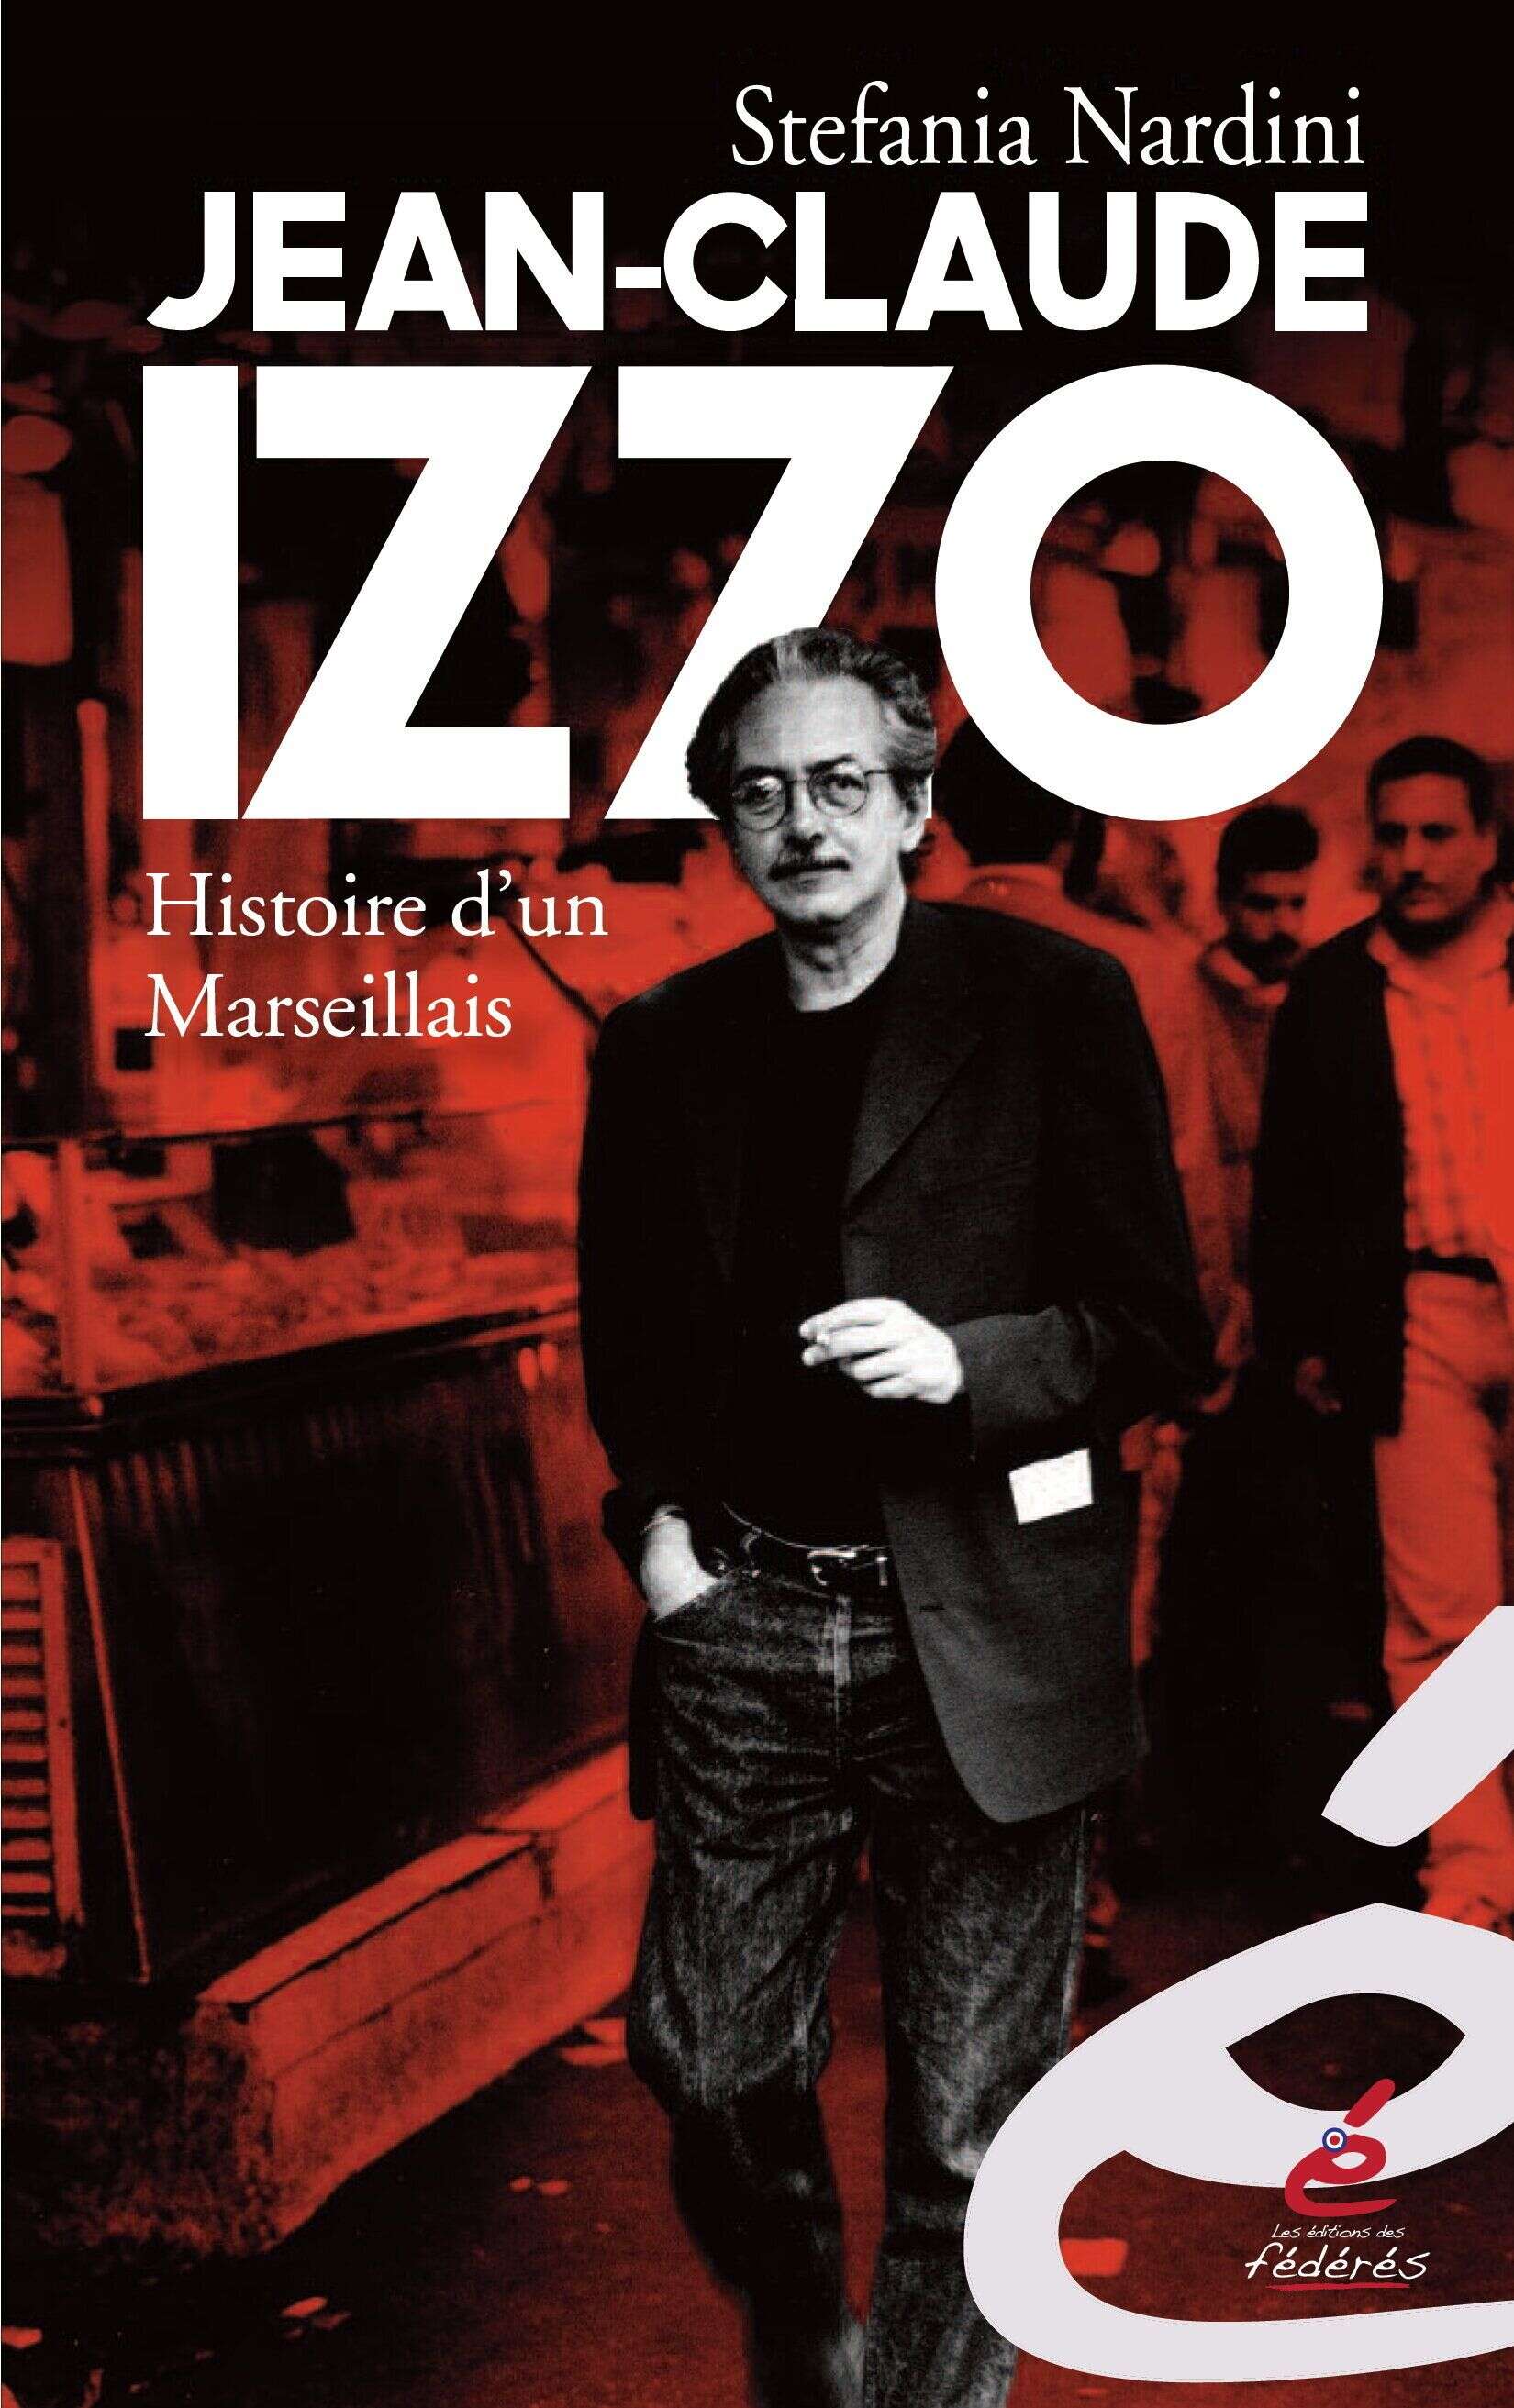 La biographie de Jean-Claude Izzo par Stefania Nardini